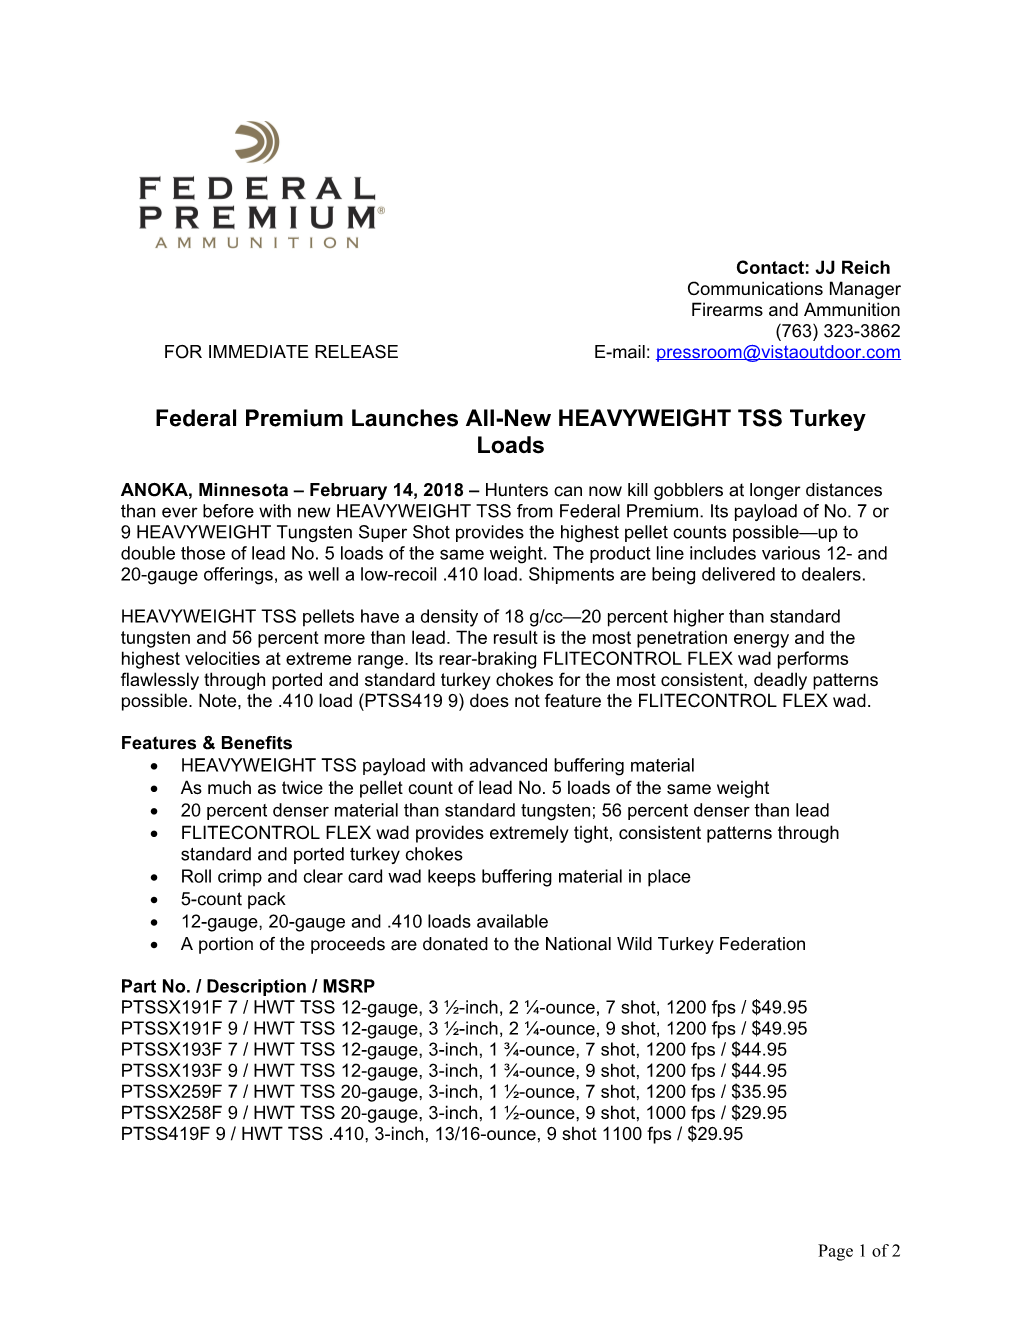 Federal Premium Launches All-New HEAVYWEIGHT TSS Turkey Loads